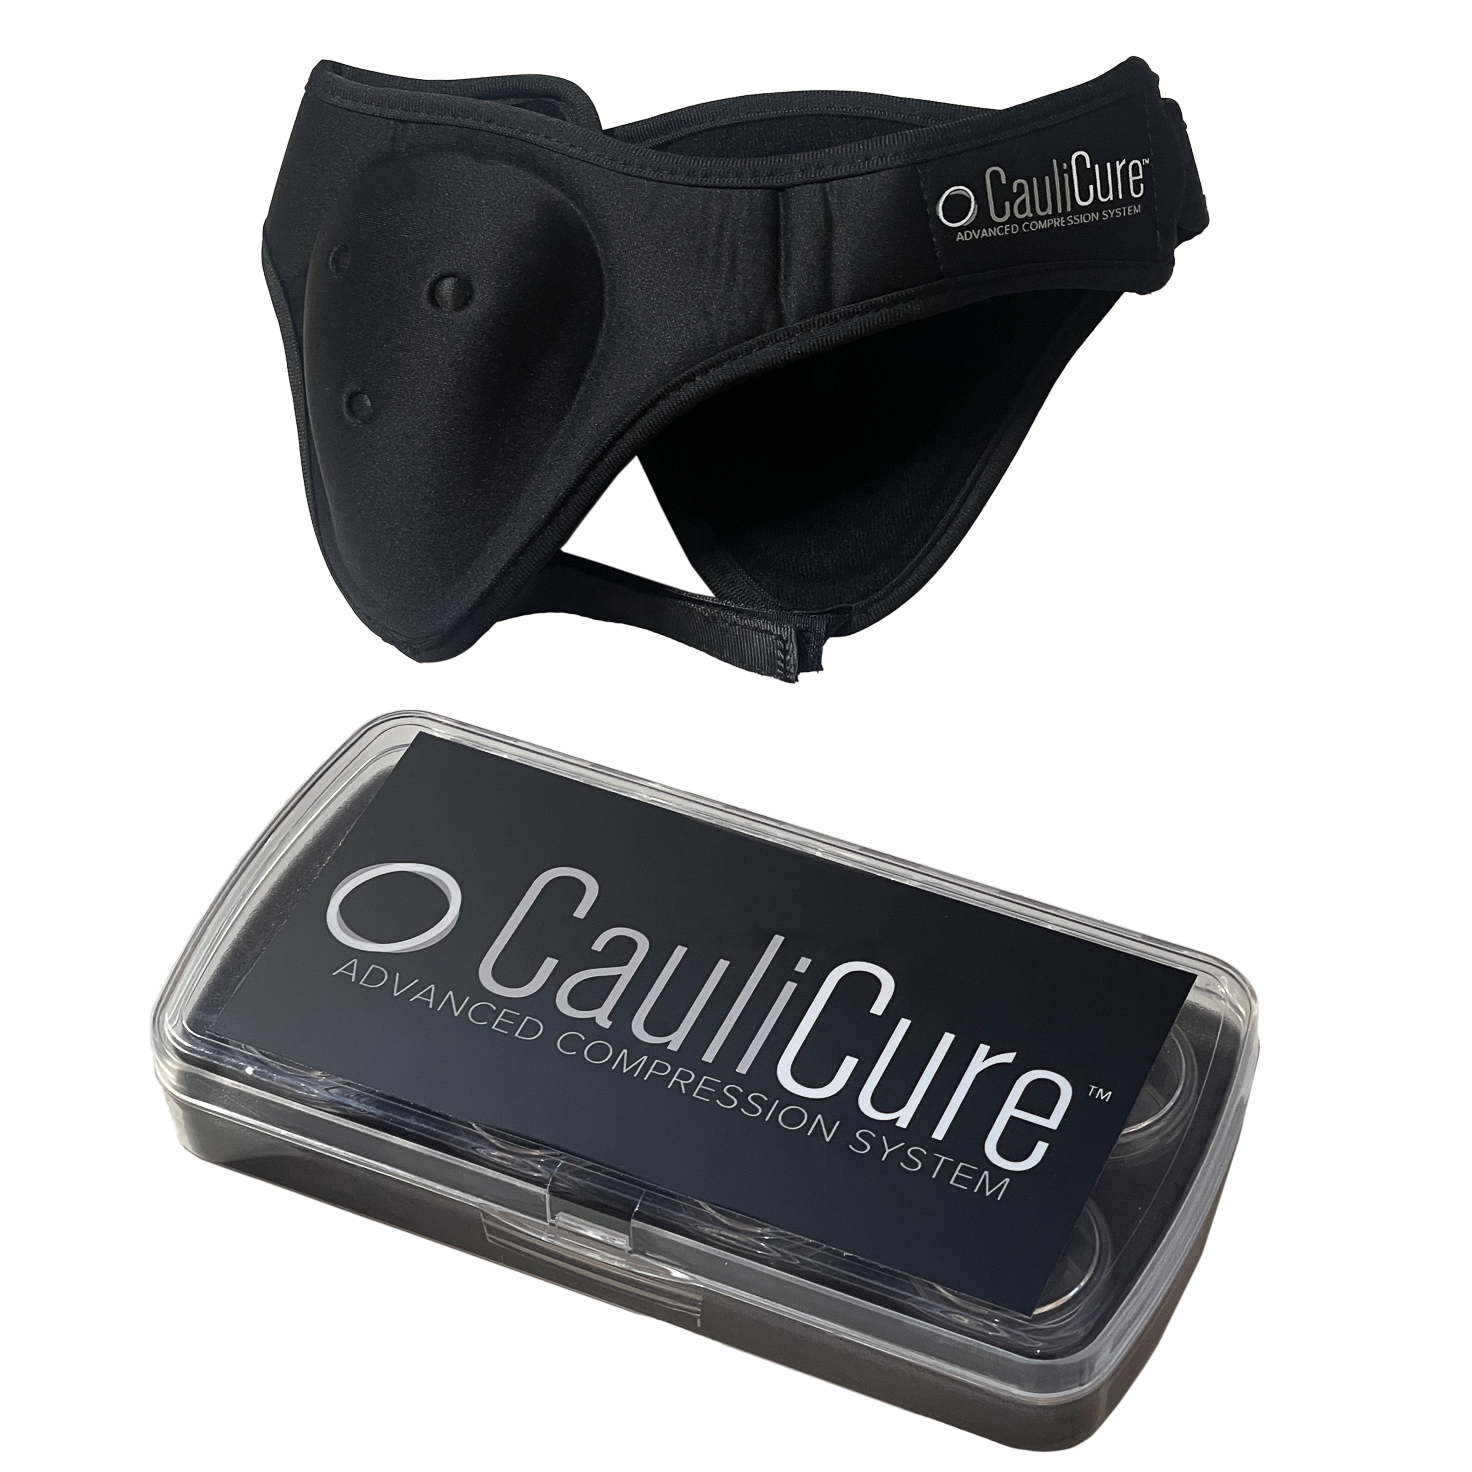 Caulicure Advanced Compression Kit and Caulicure Headgear